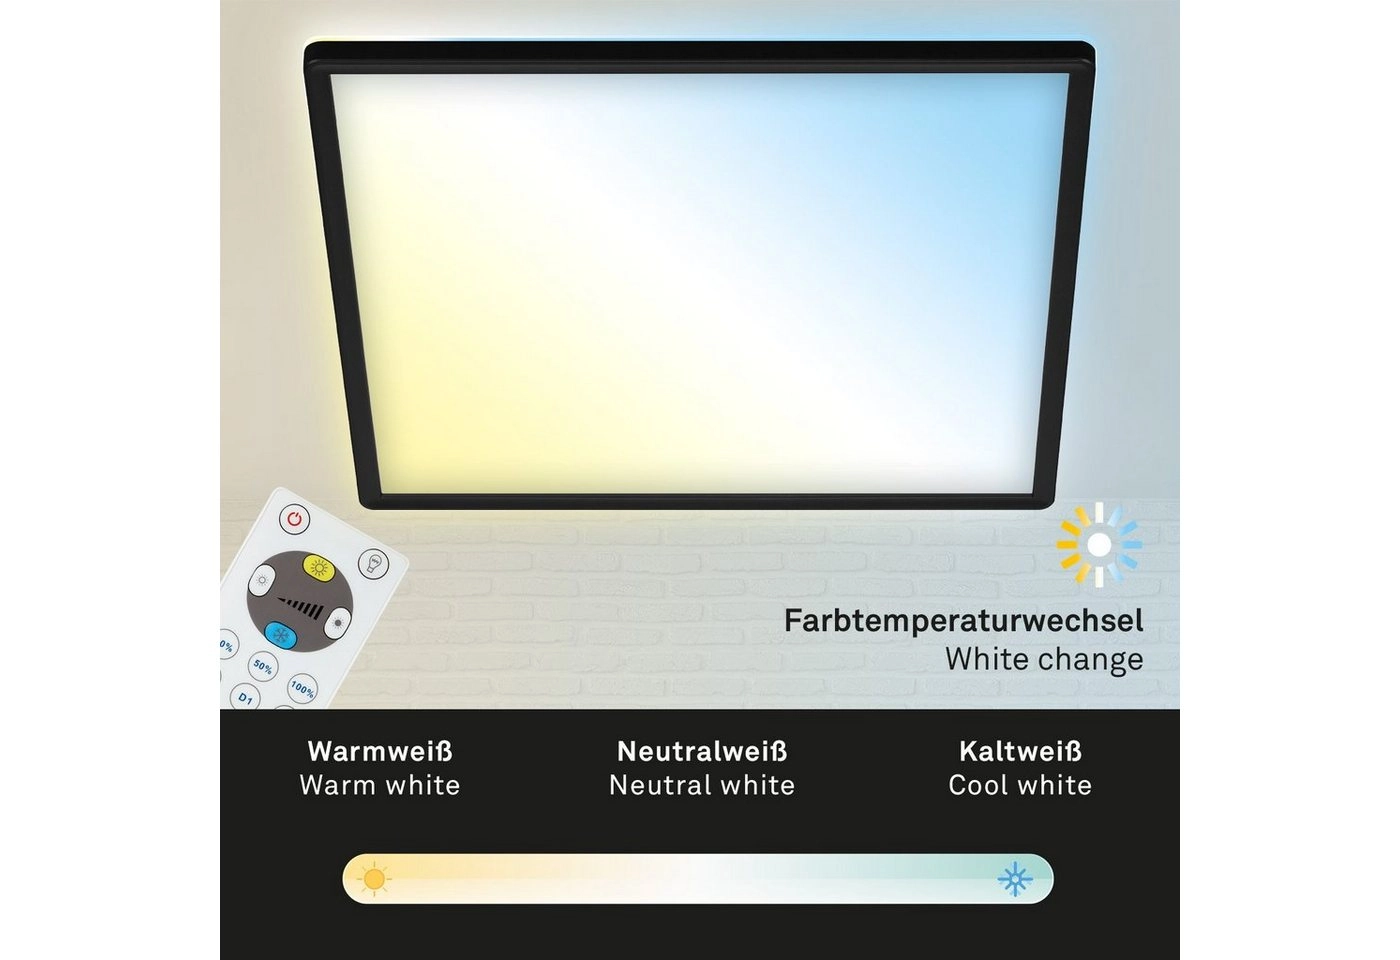 SLIM CCT LED Panel, 29,3 cm, 18 W, Schwarz